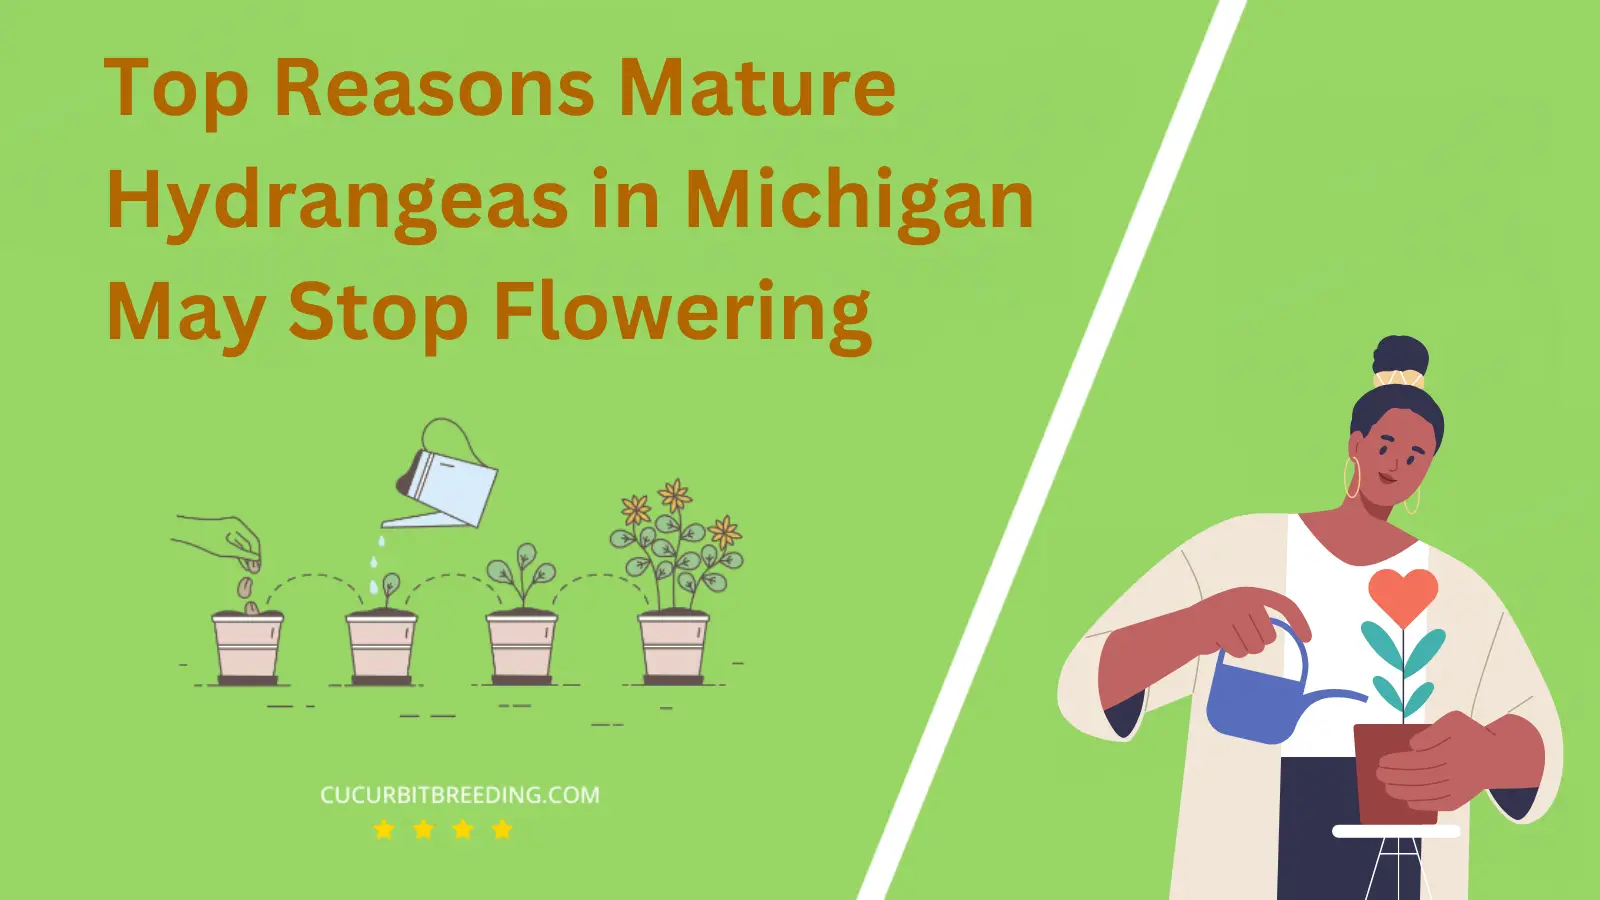 Top Reasons Mature Hydrangeas in Michigan May Stop Flowering